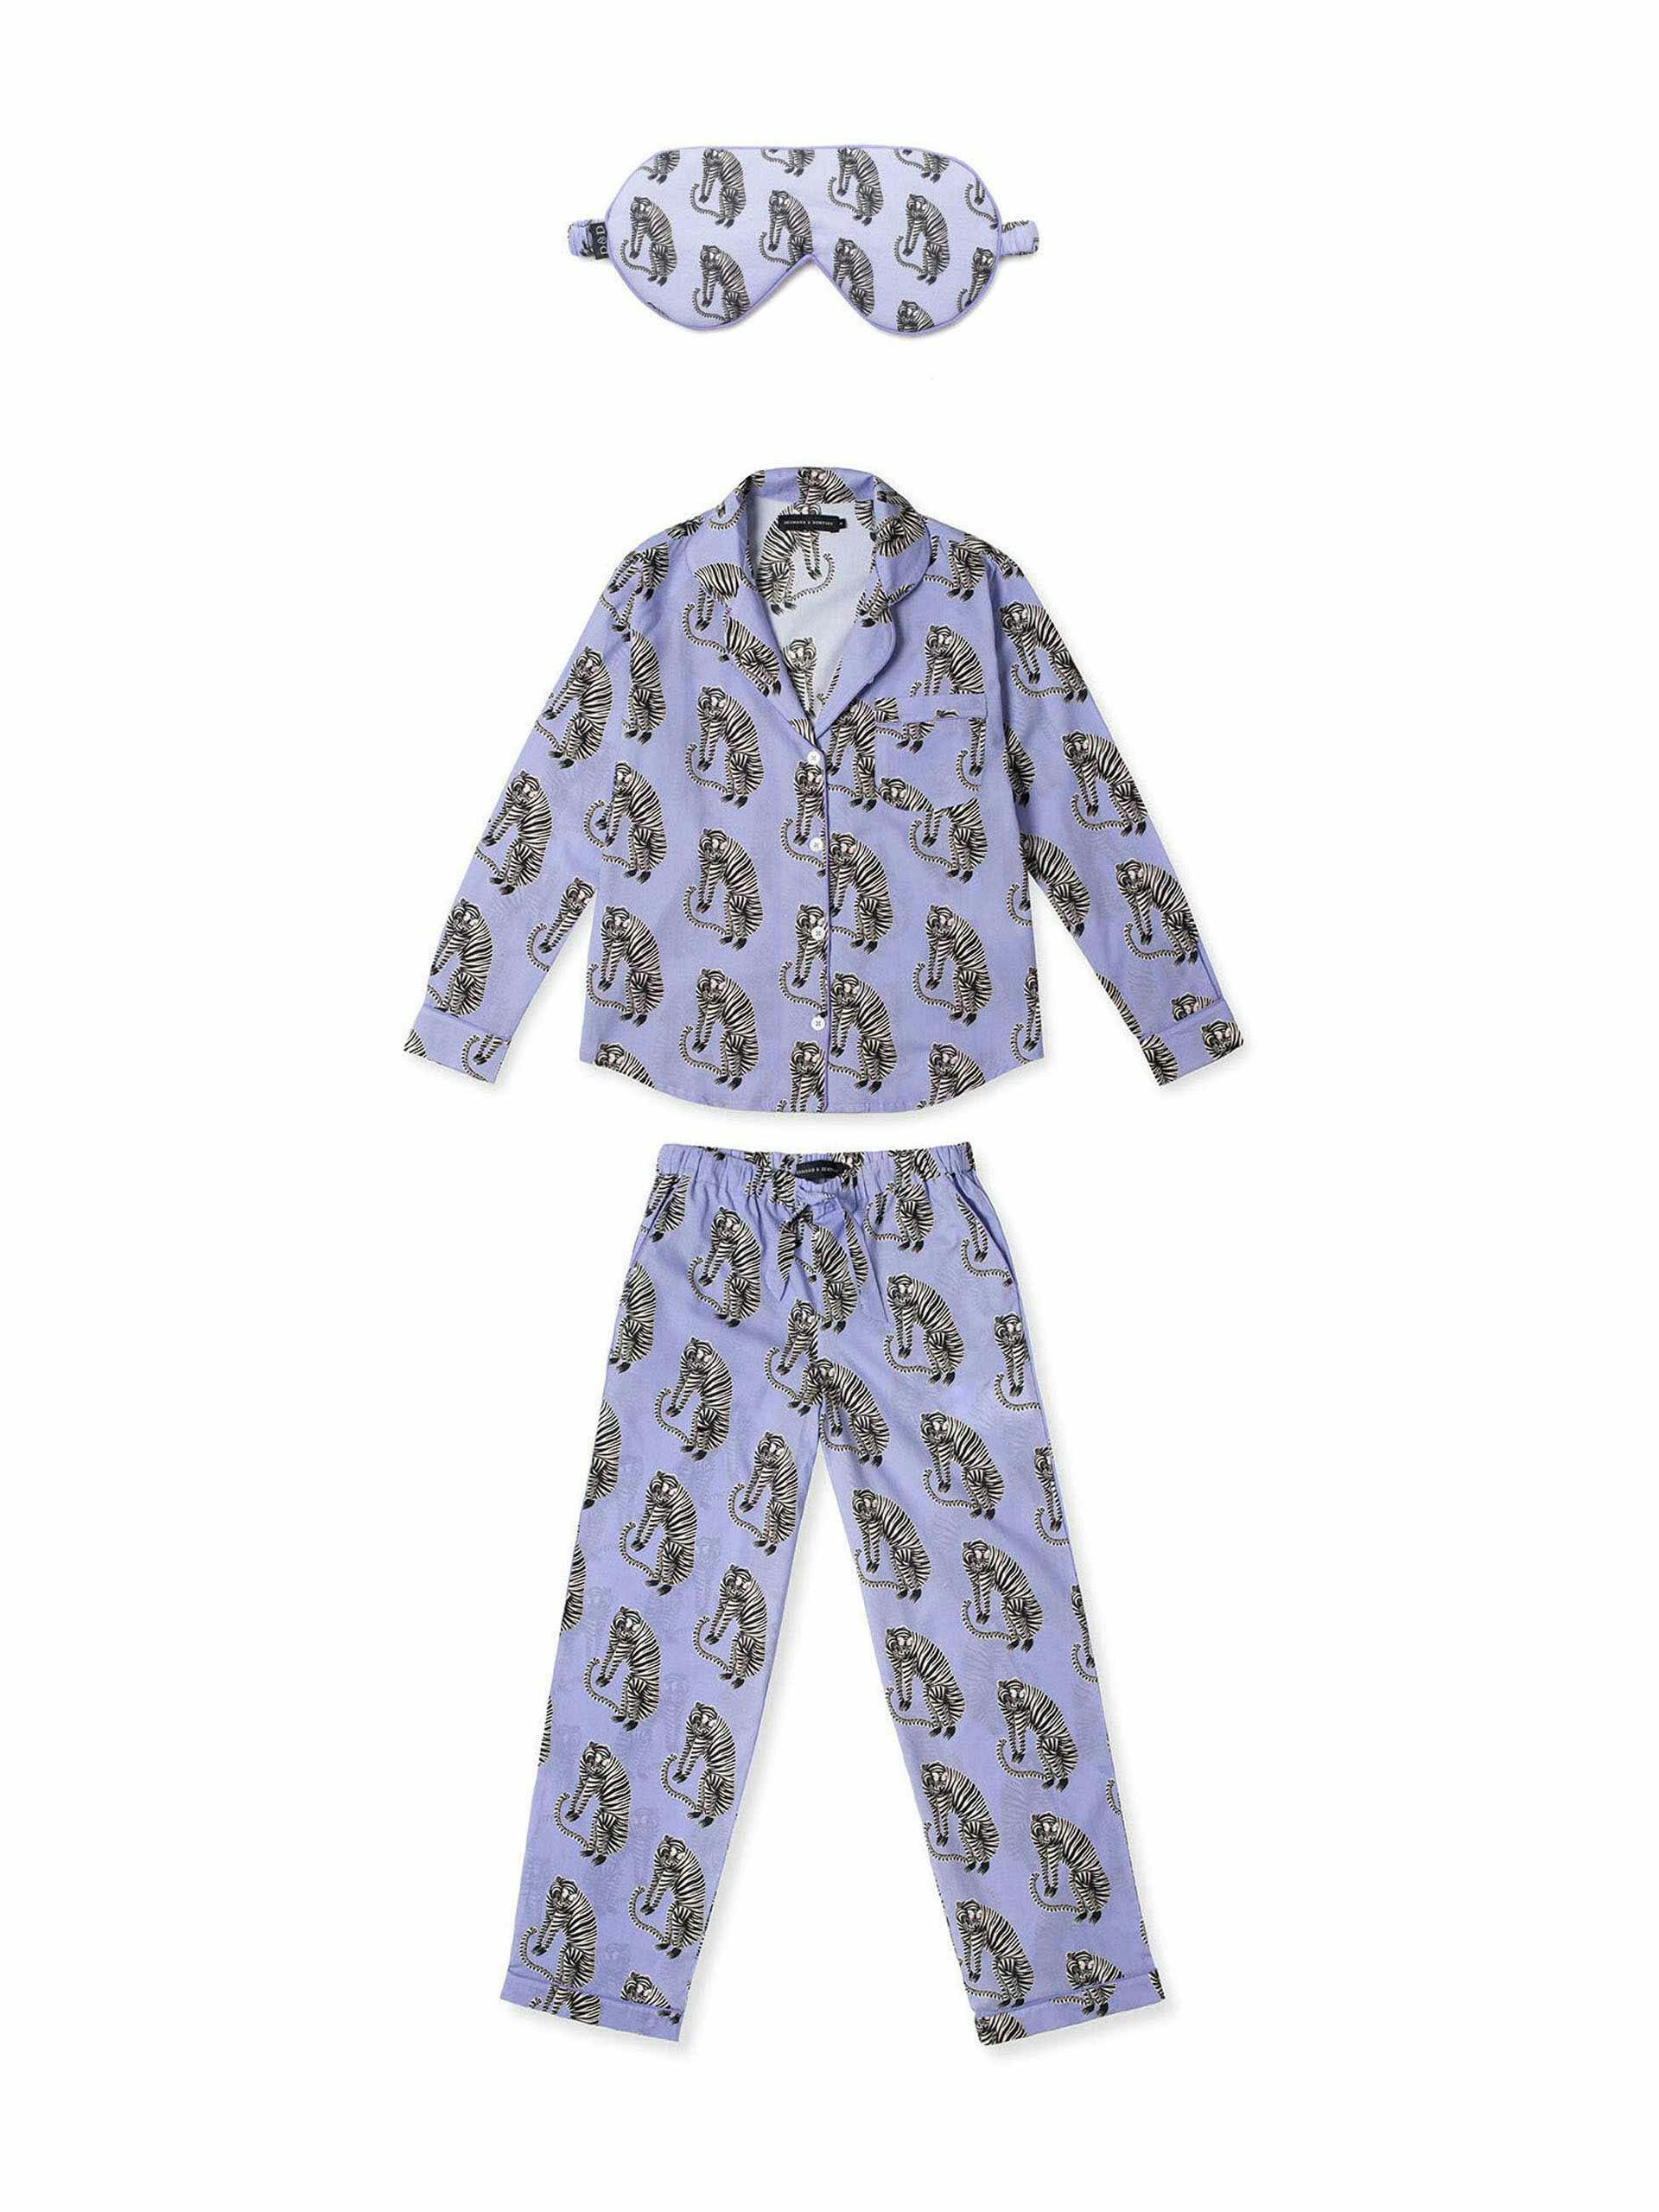 Idle tigers purple pyjama and eye mask set